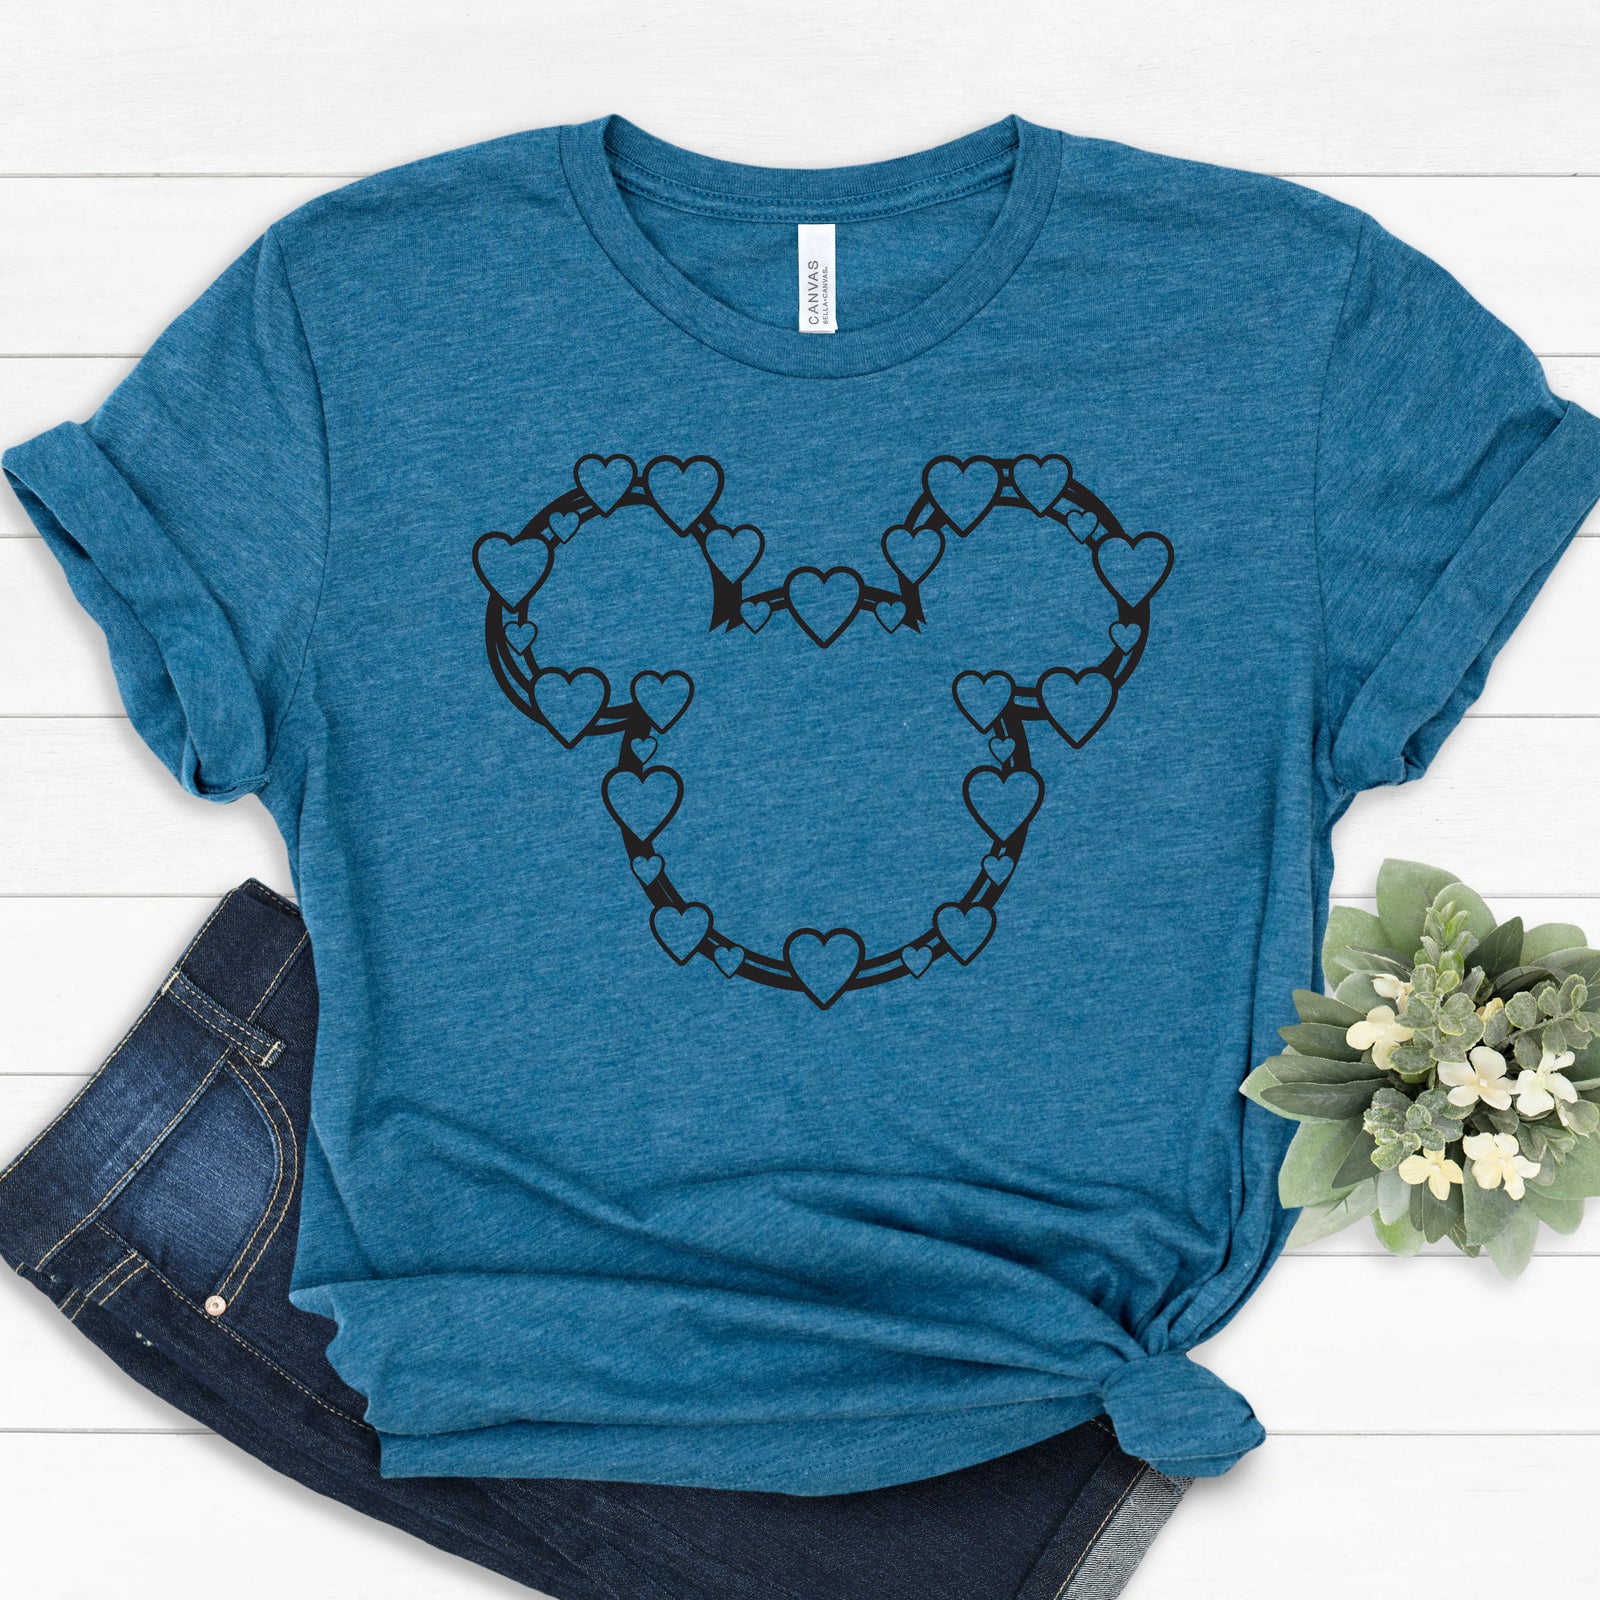 Mickey t shirt with Hearts - Valentines Mickey - Mickey Heart Outline - Disney Valentine's